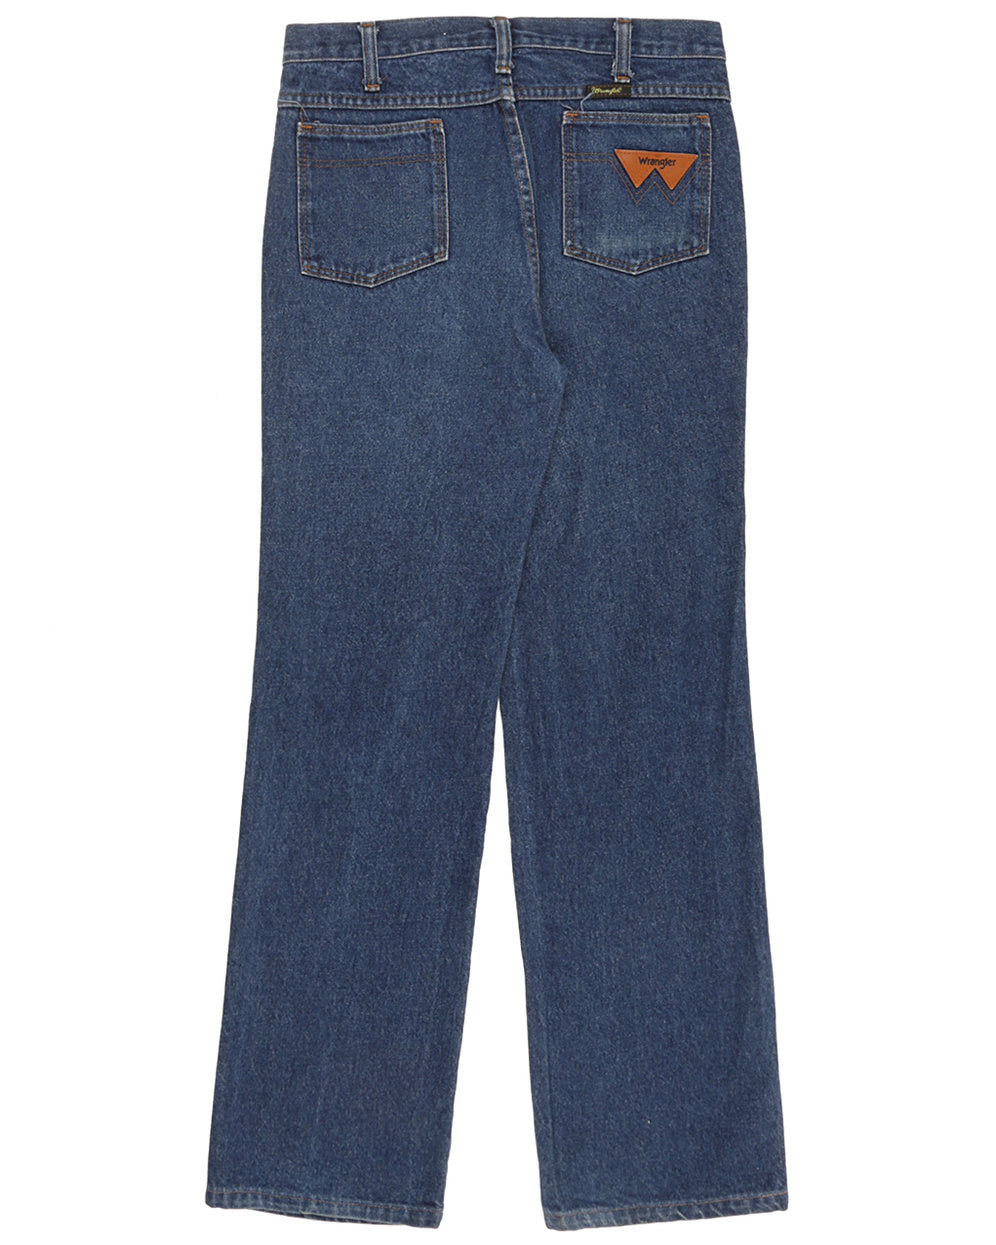 80s Wrangler High Waisted Jeans - 30W